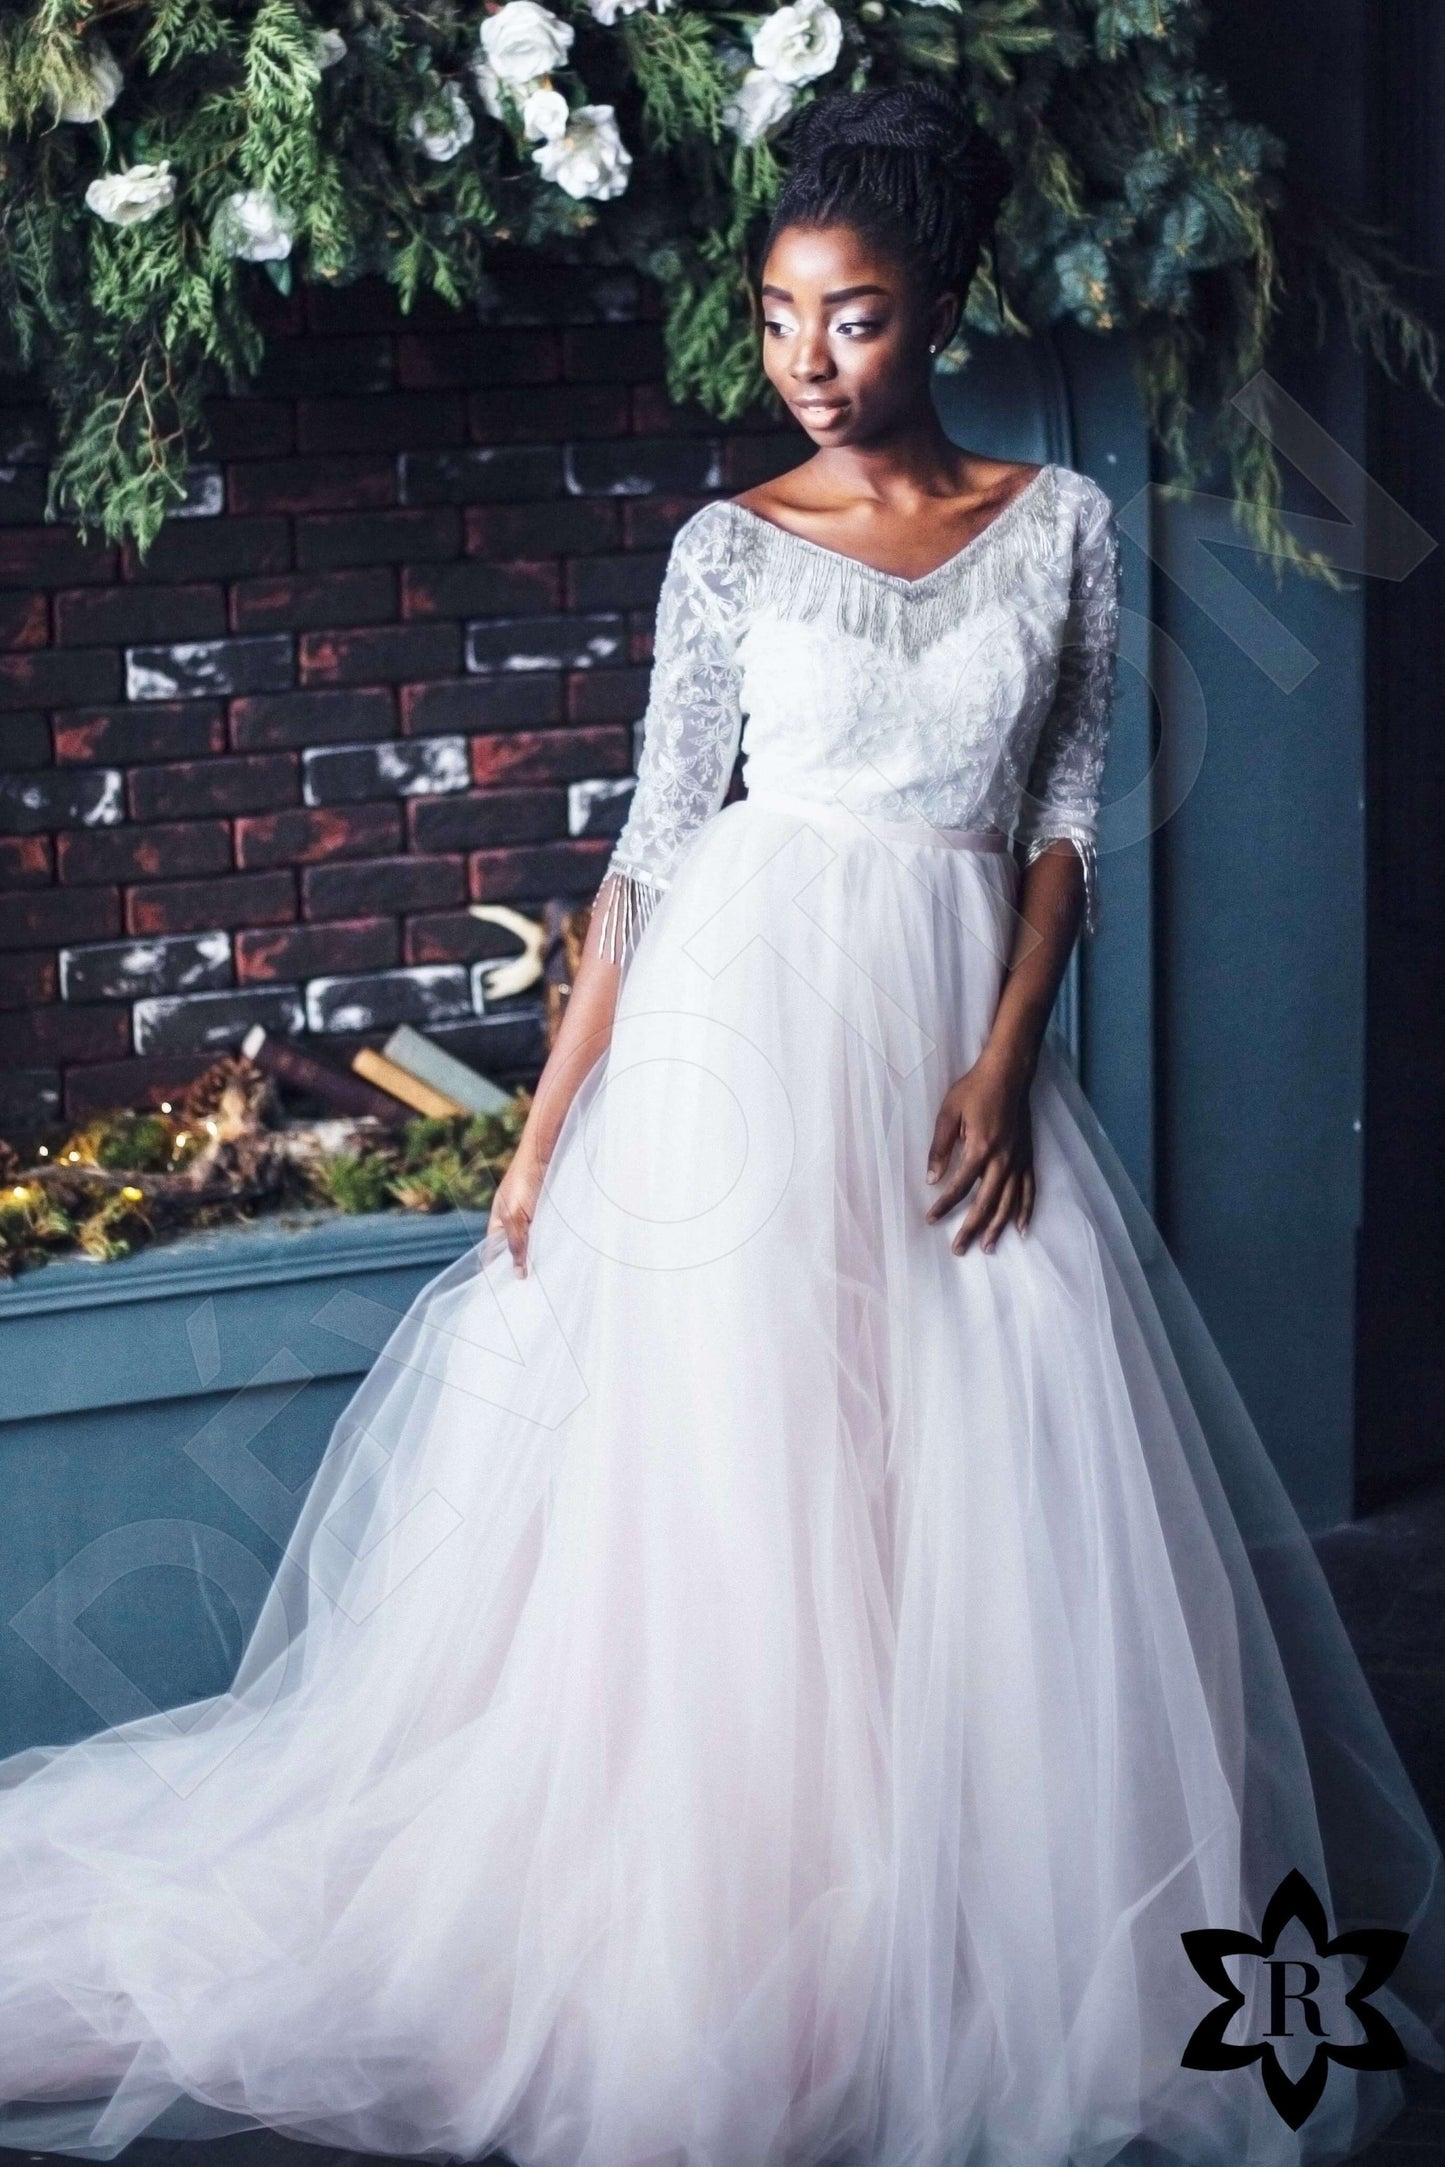 Ariadna Open back A-line 3/4 sleeve Wedding Dress Front